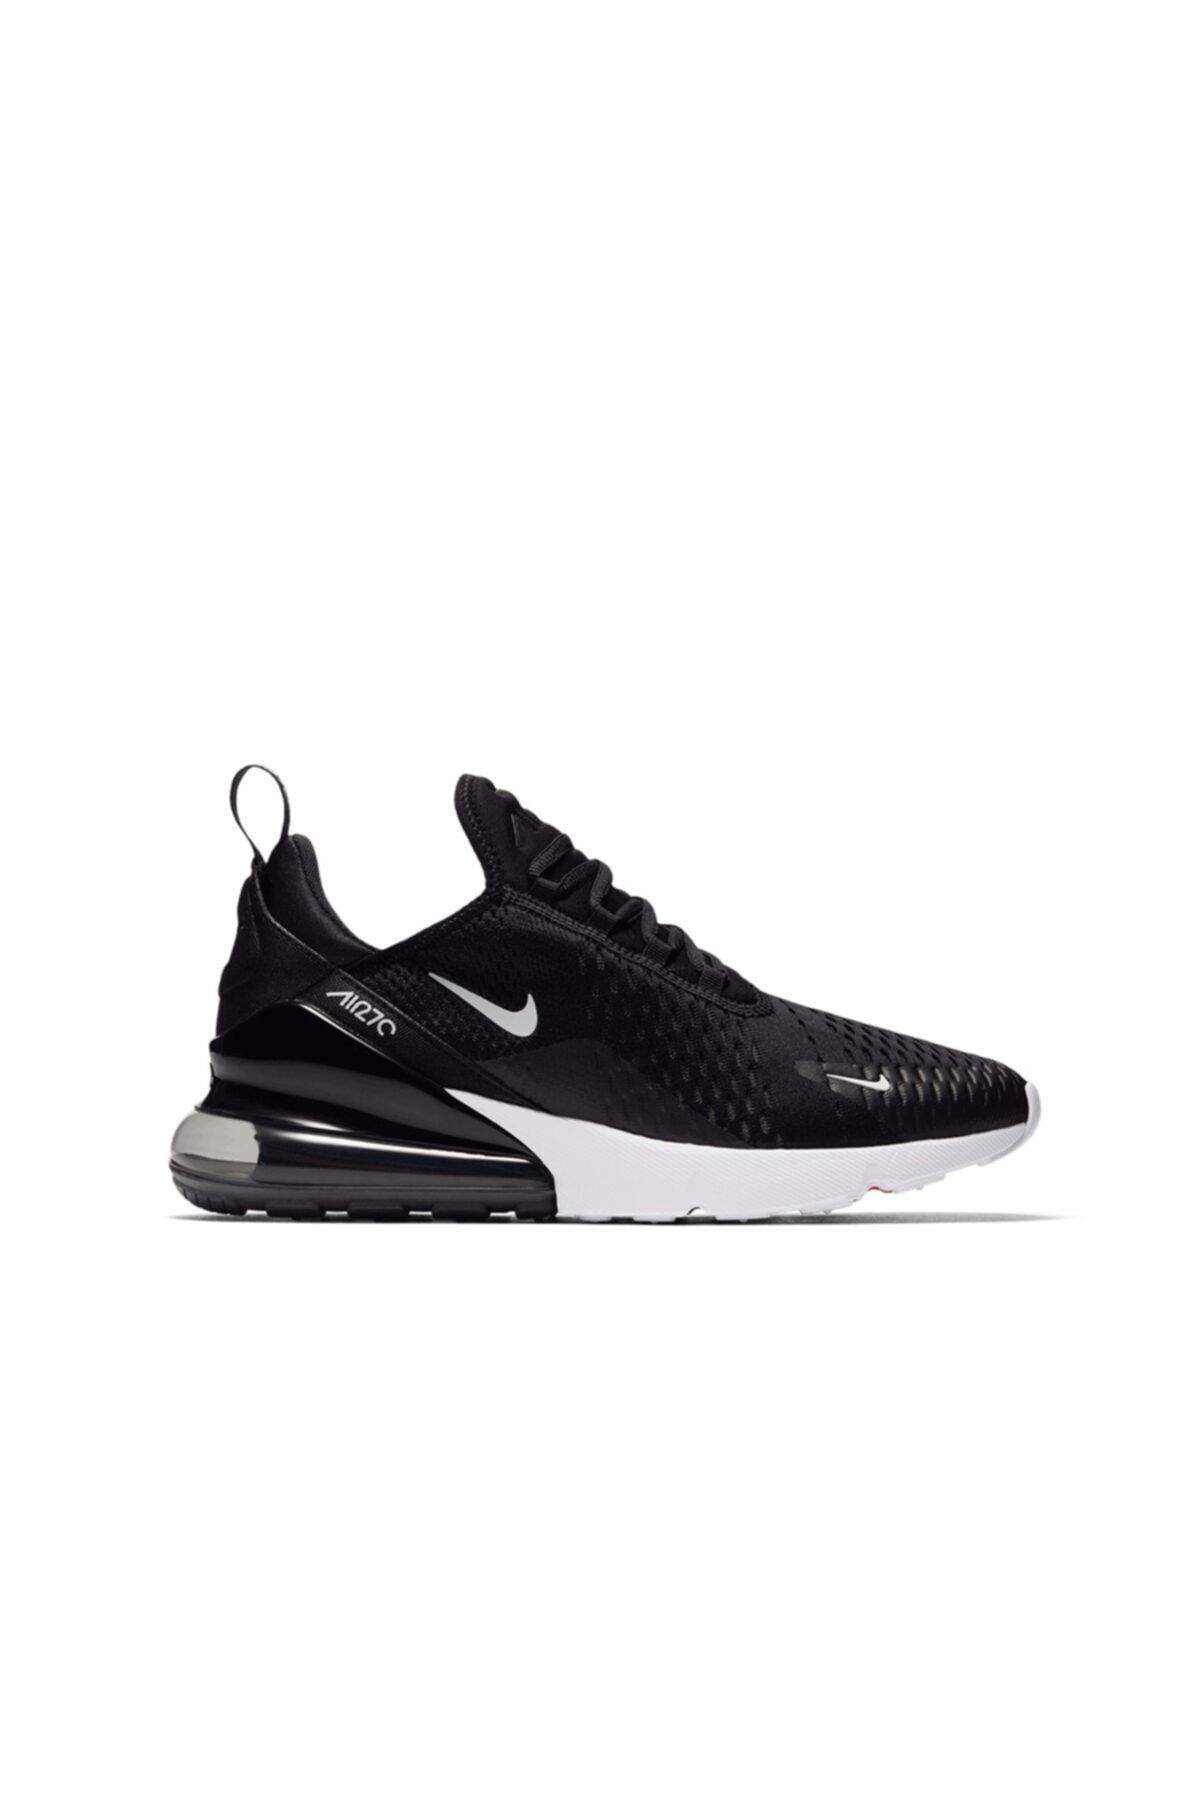 Nike Air Max 270 Sneaker Ayakkabı Ah8050-002 Siyah-beyaz